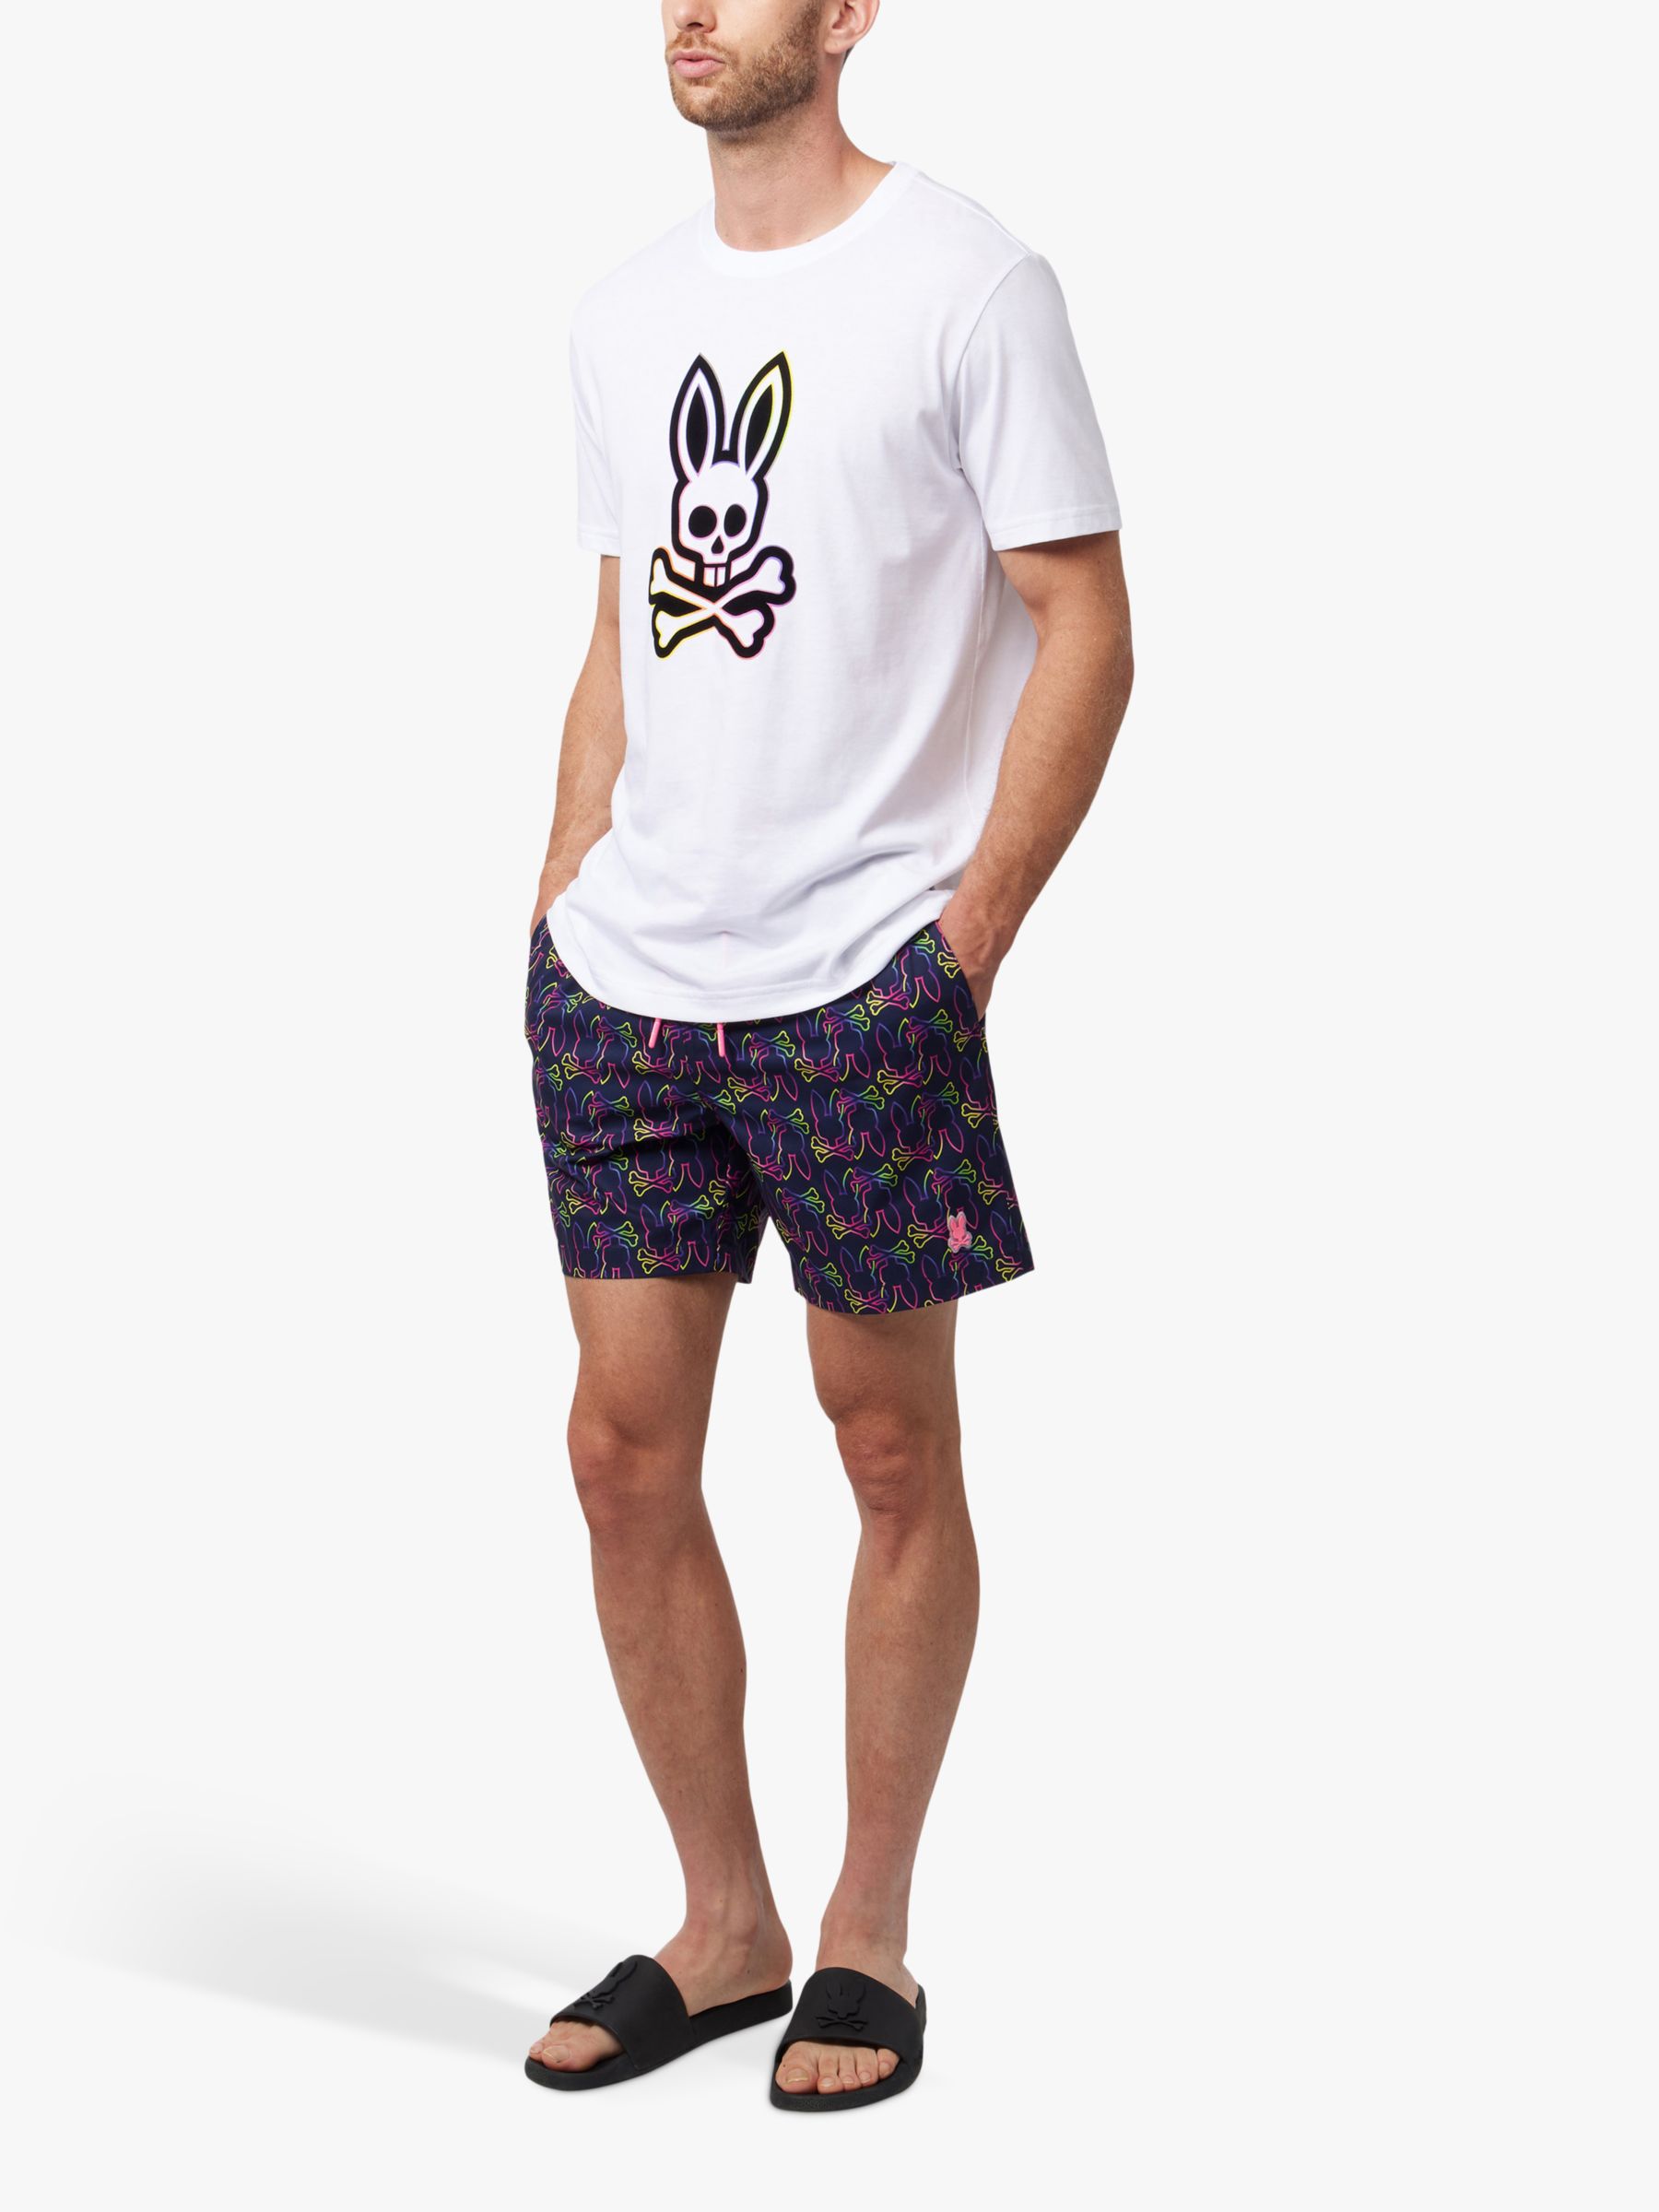 Psycho Bunny Cotton Graphic T-Shirt, White, XL